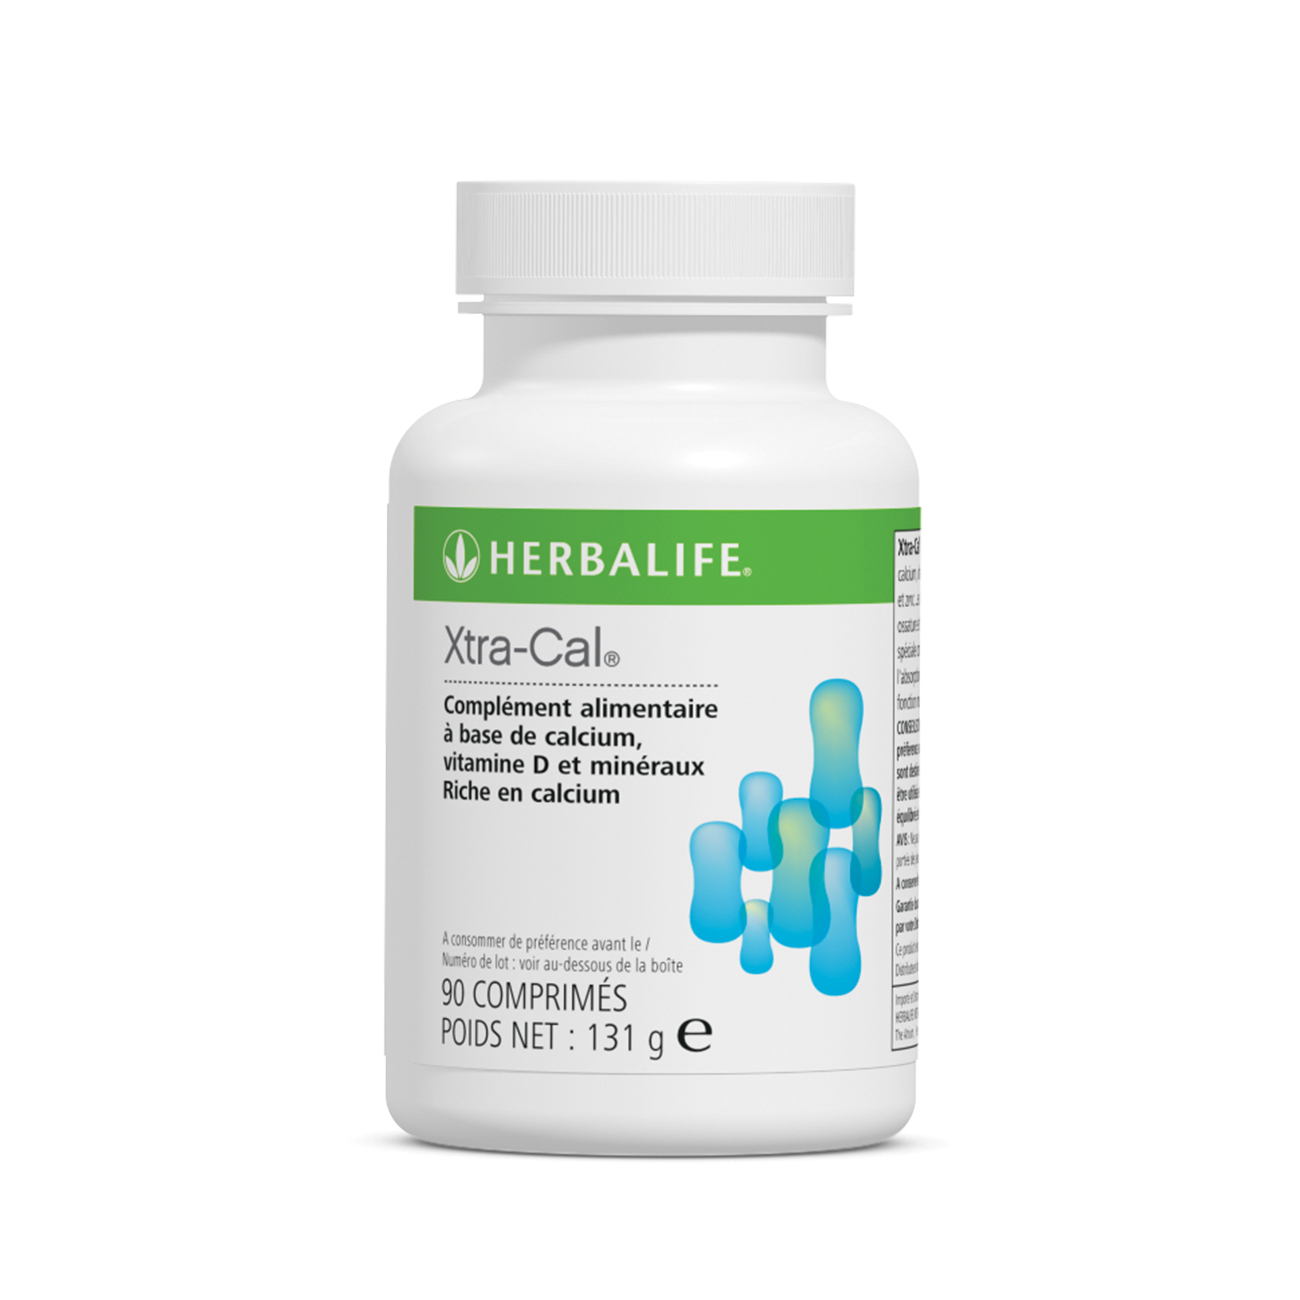 Xtra-Cal® Complement a base de calcium, vitamines D et mineraux product shot